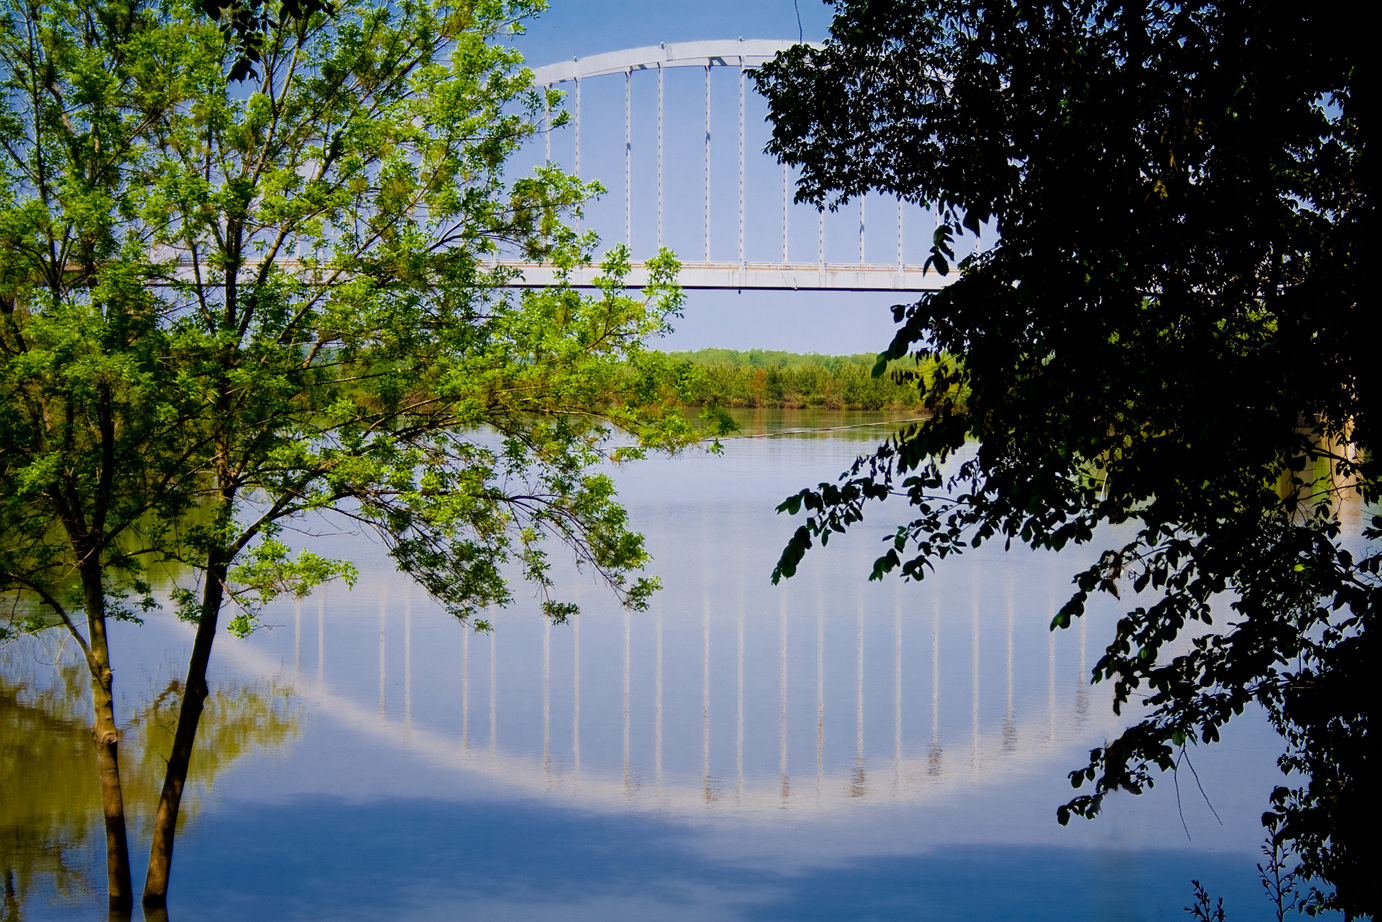 Des Arc, AR: Bridge from river